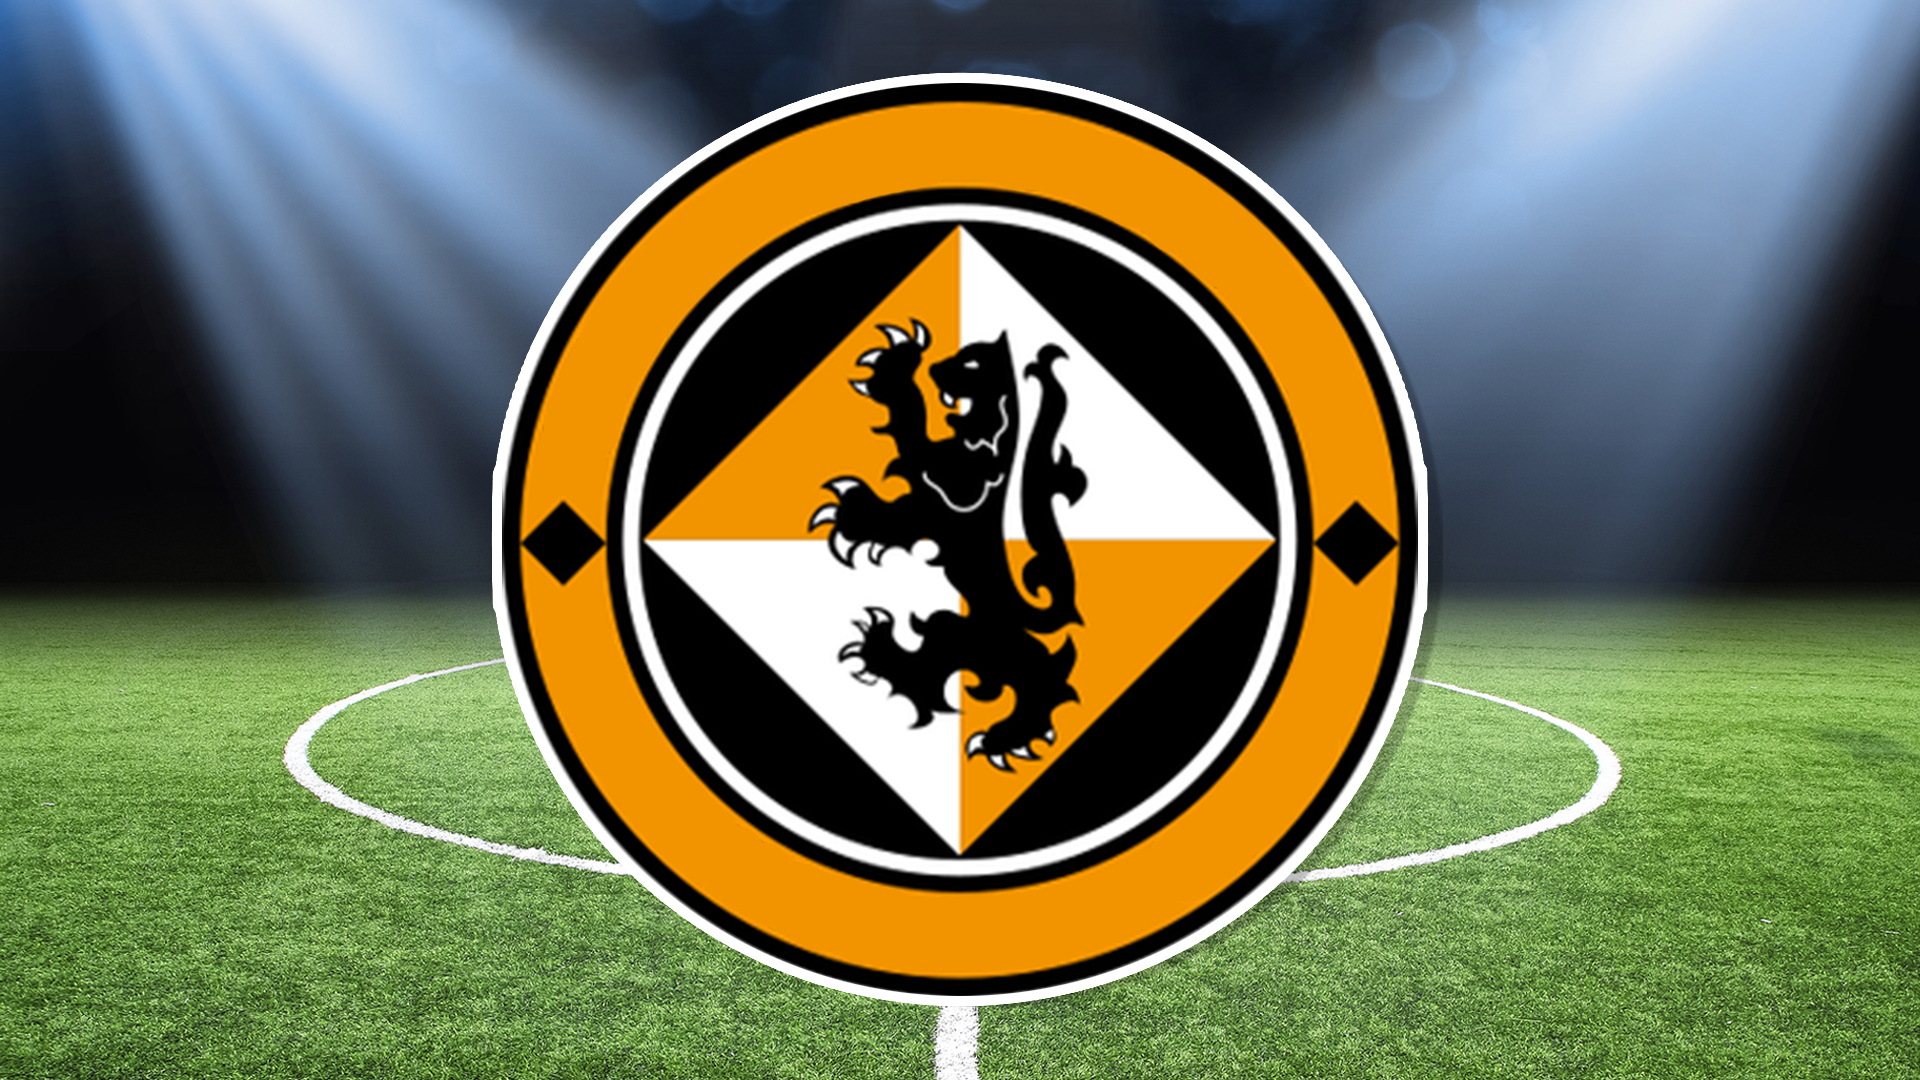 Football logo 4